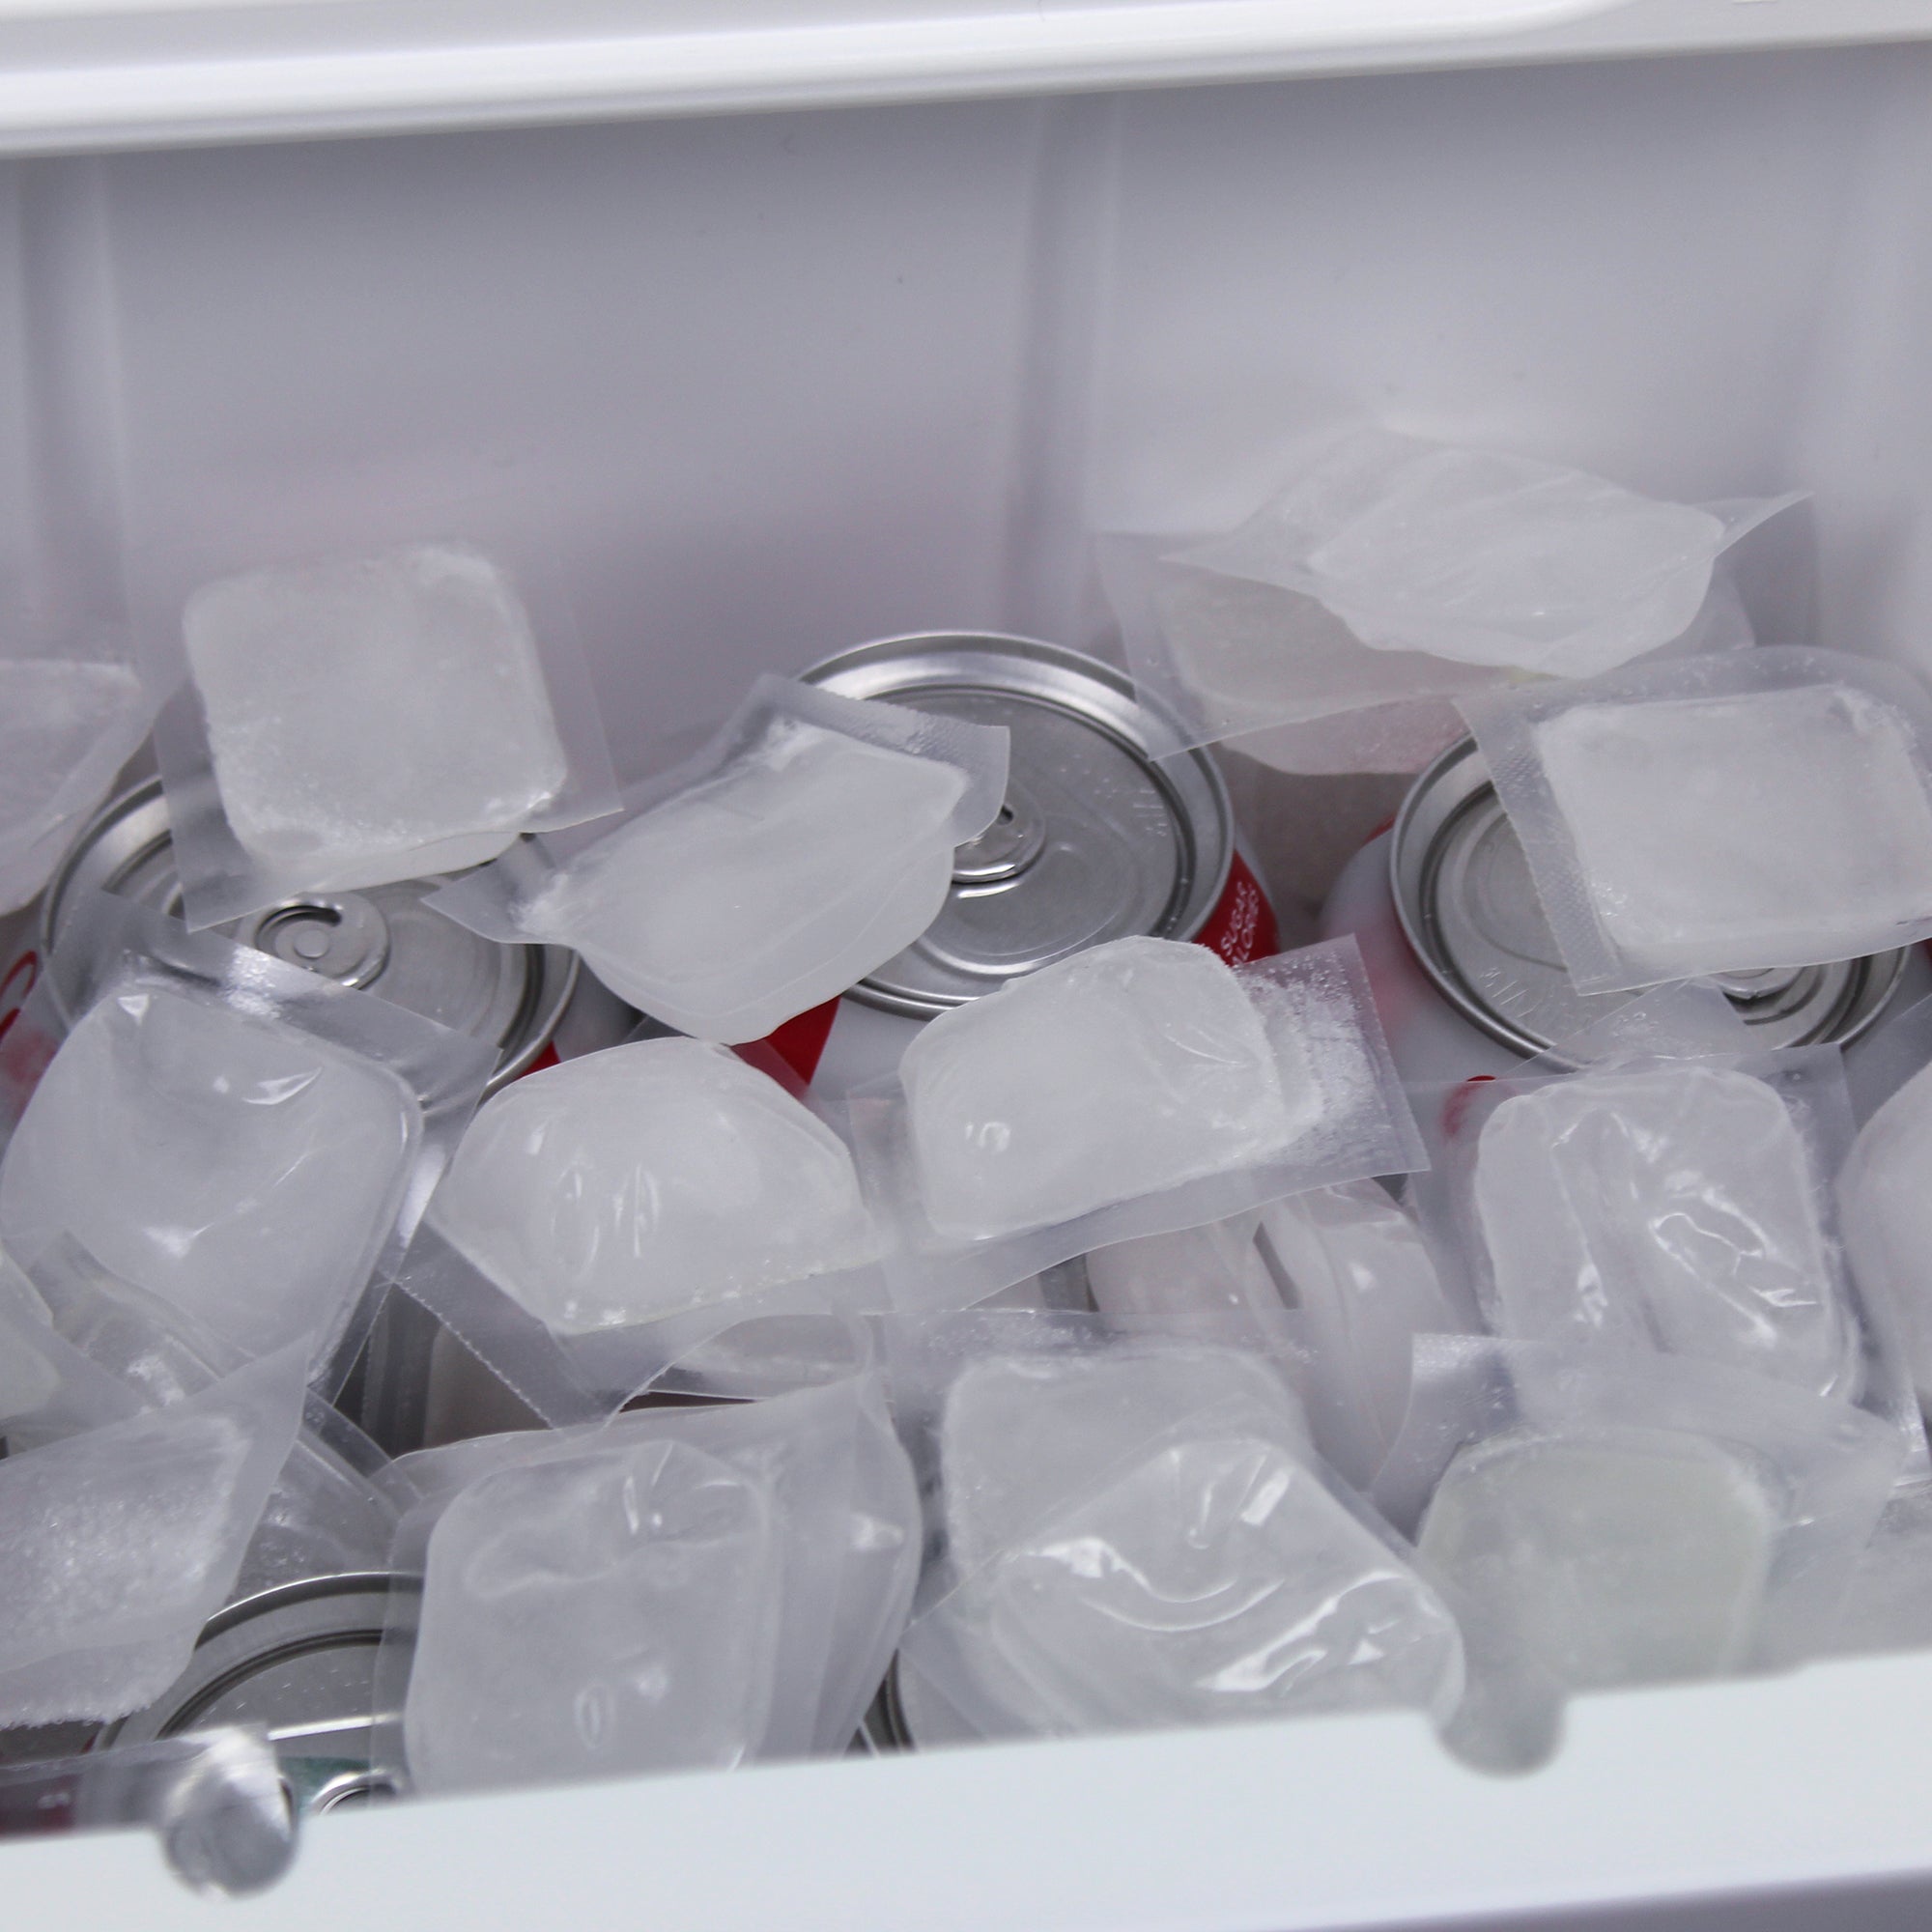 5 lb. Freezer Ice Pack